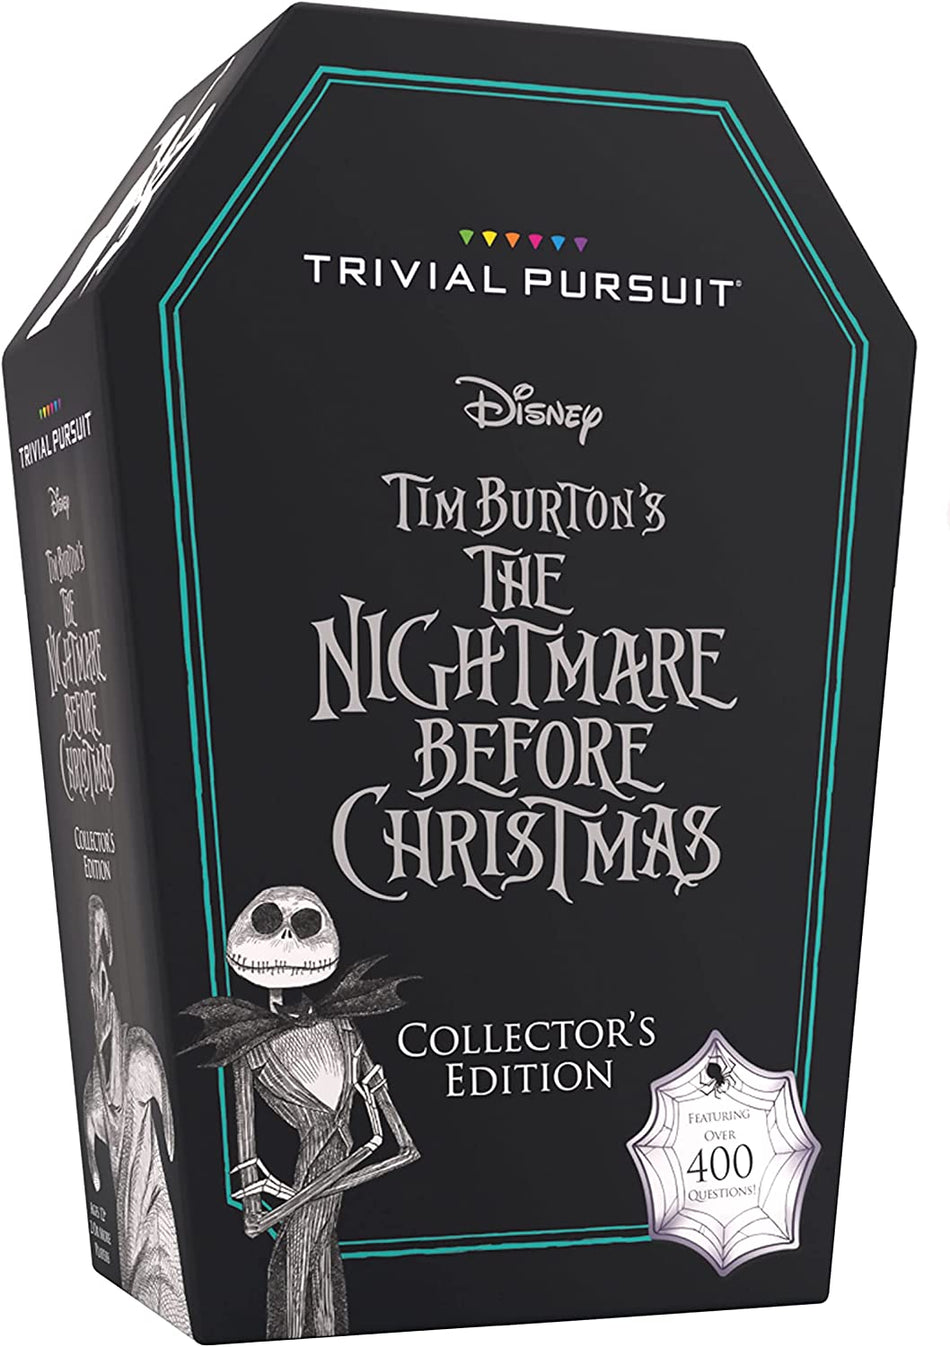 TRIVIAL PURSUIT: Disney Tim Burton’s The Nightmare Before Christmas